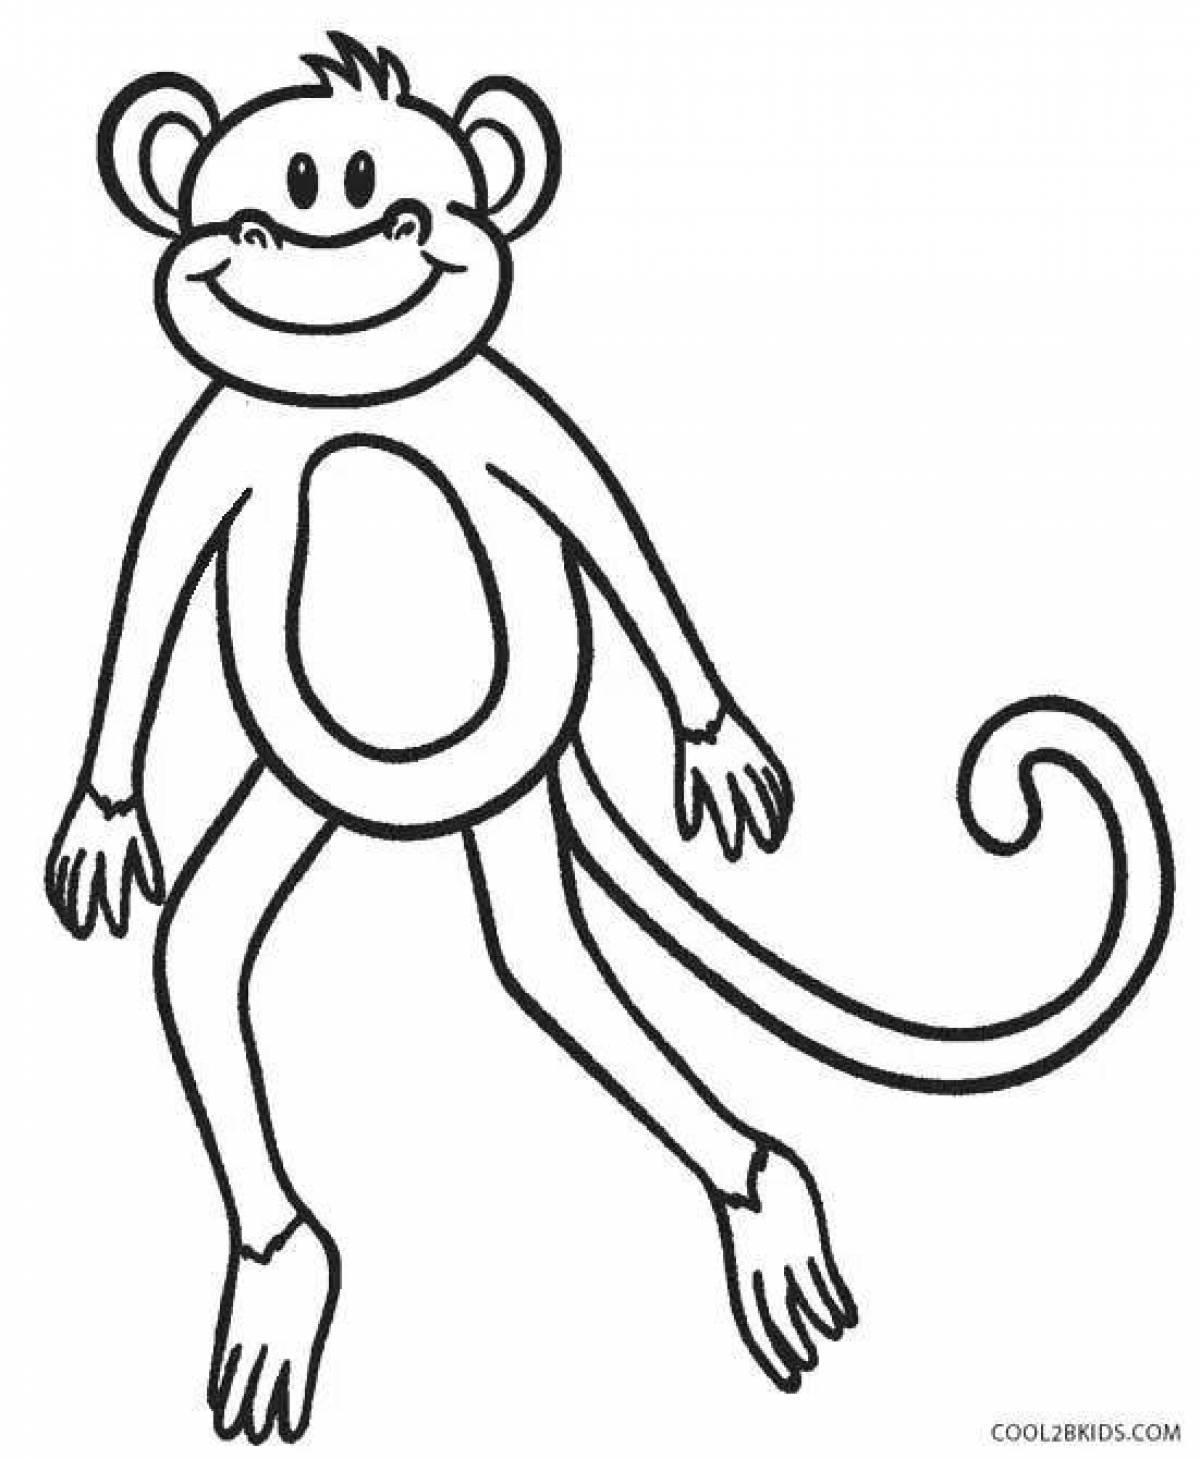 Буйная раскраска обезьяна и очки